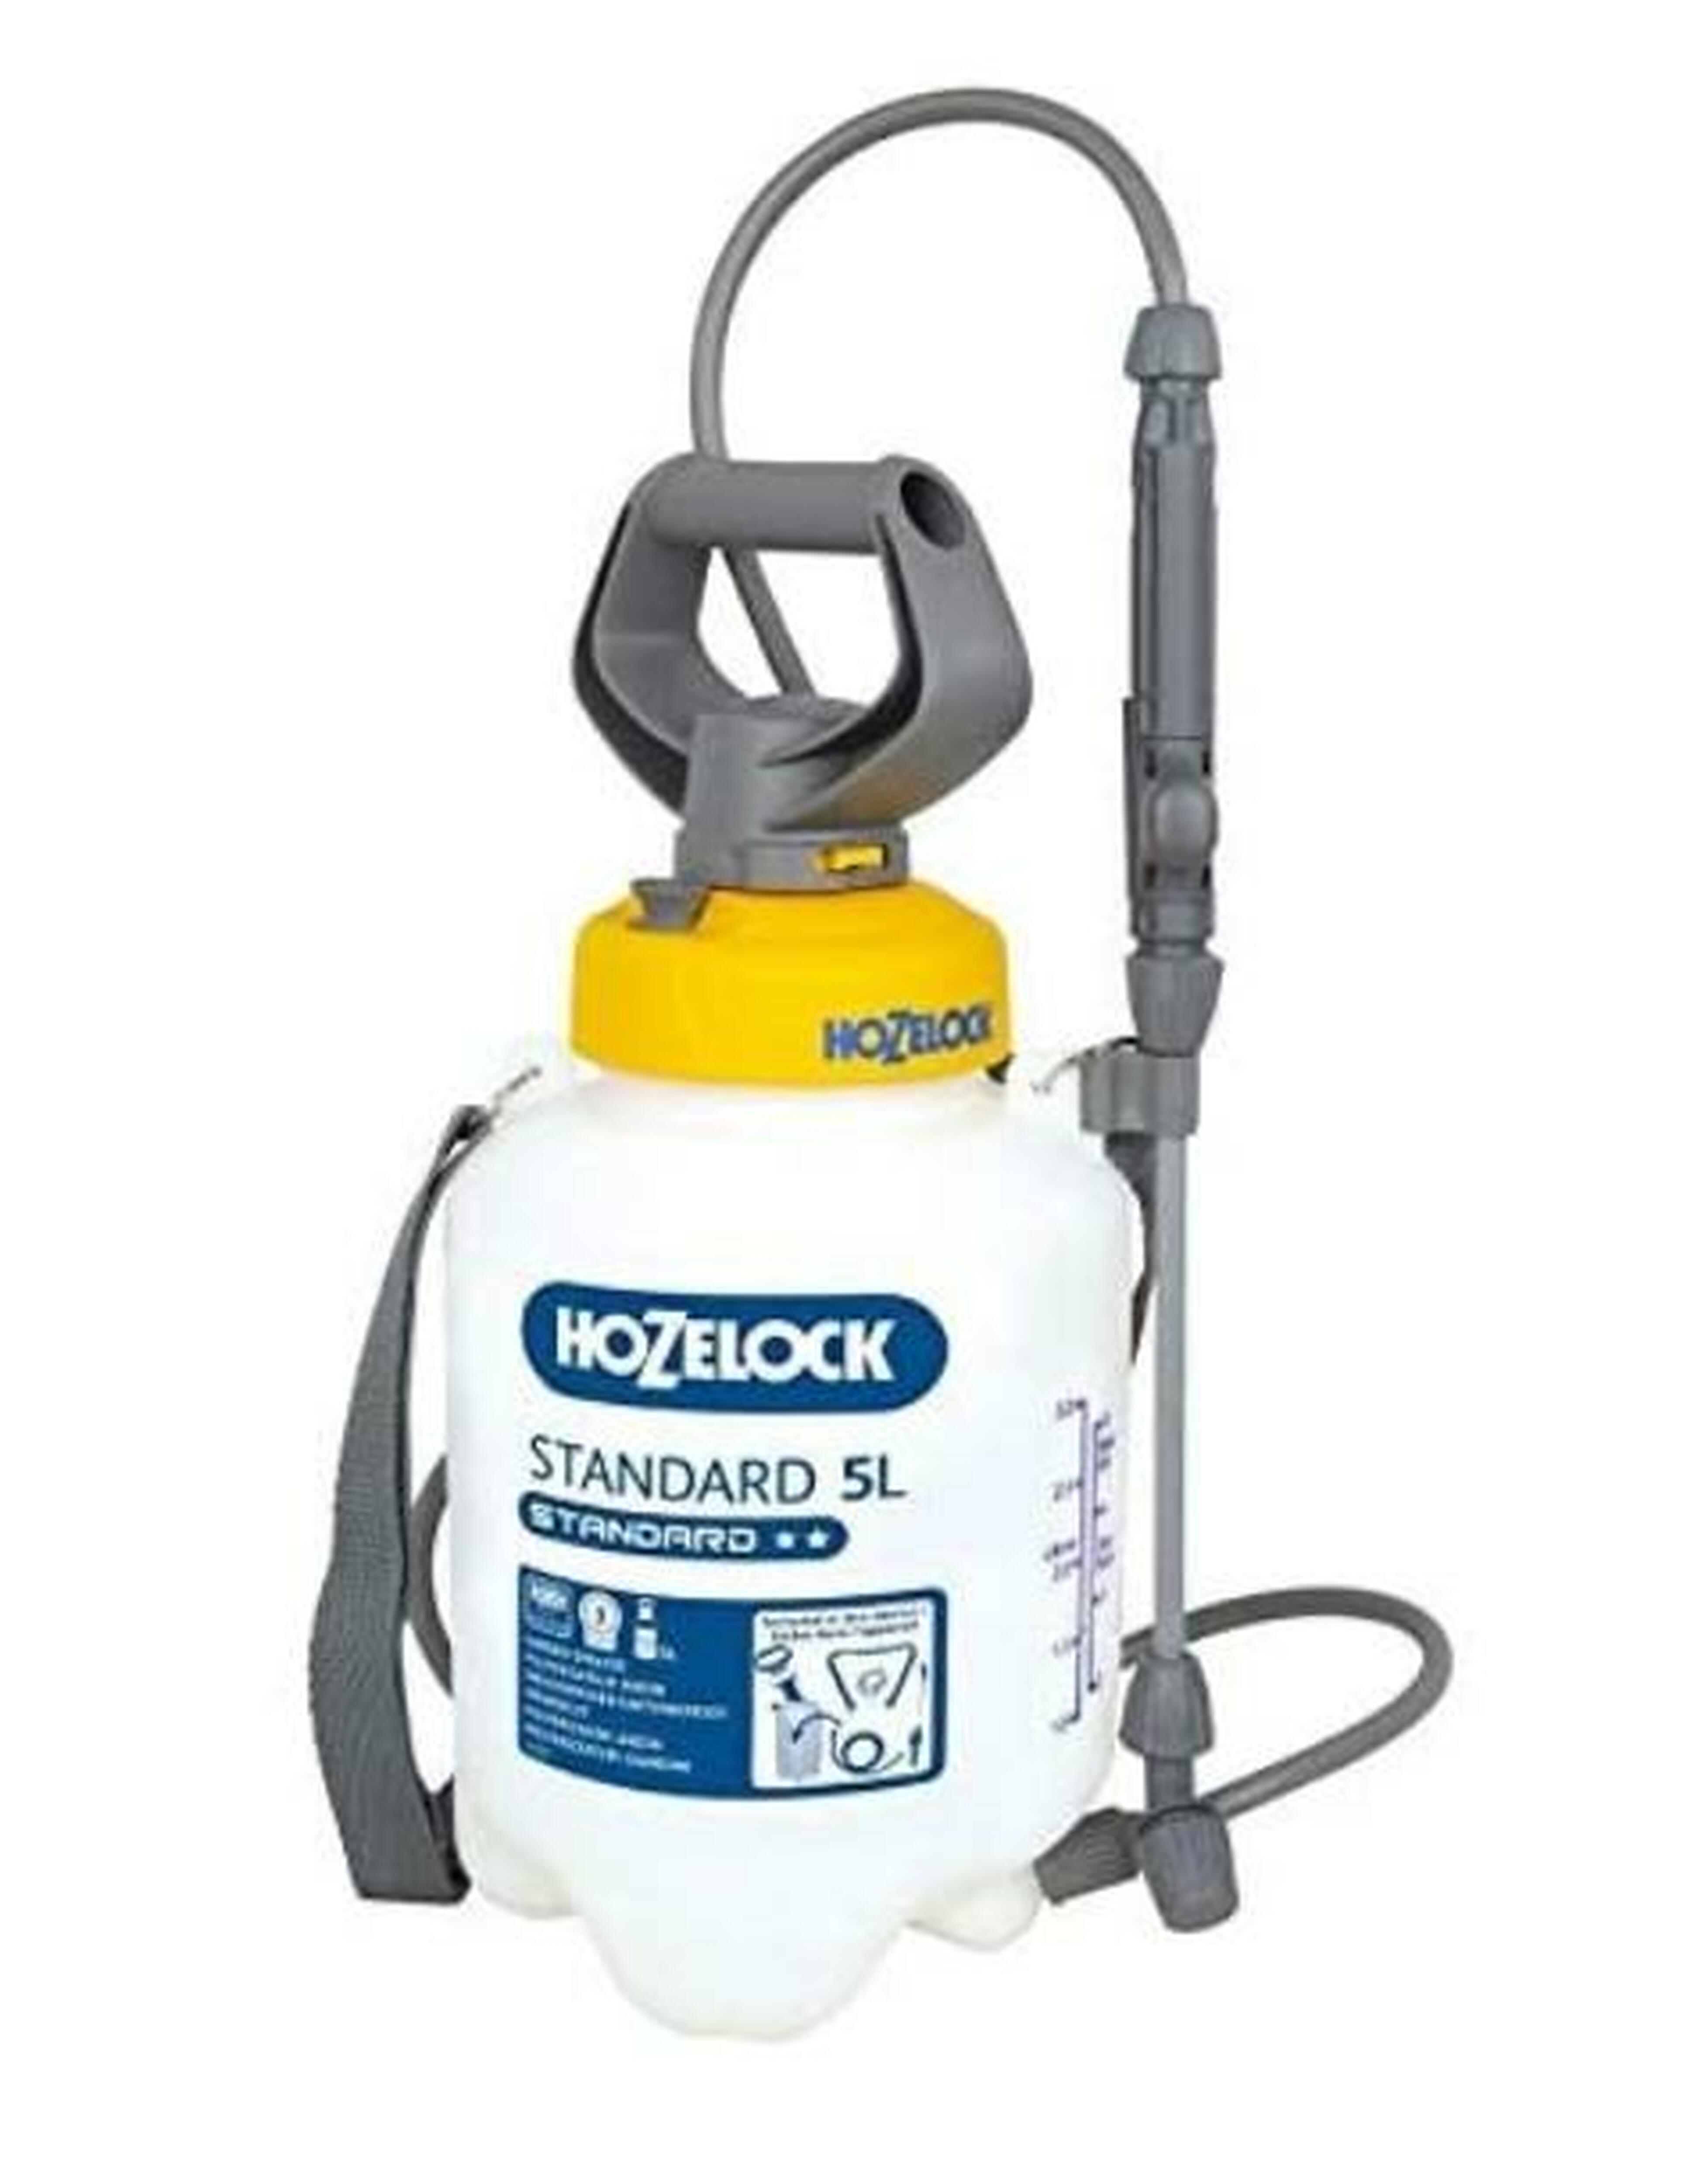 Hozelock Standard 5L Pressure Sprayer